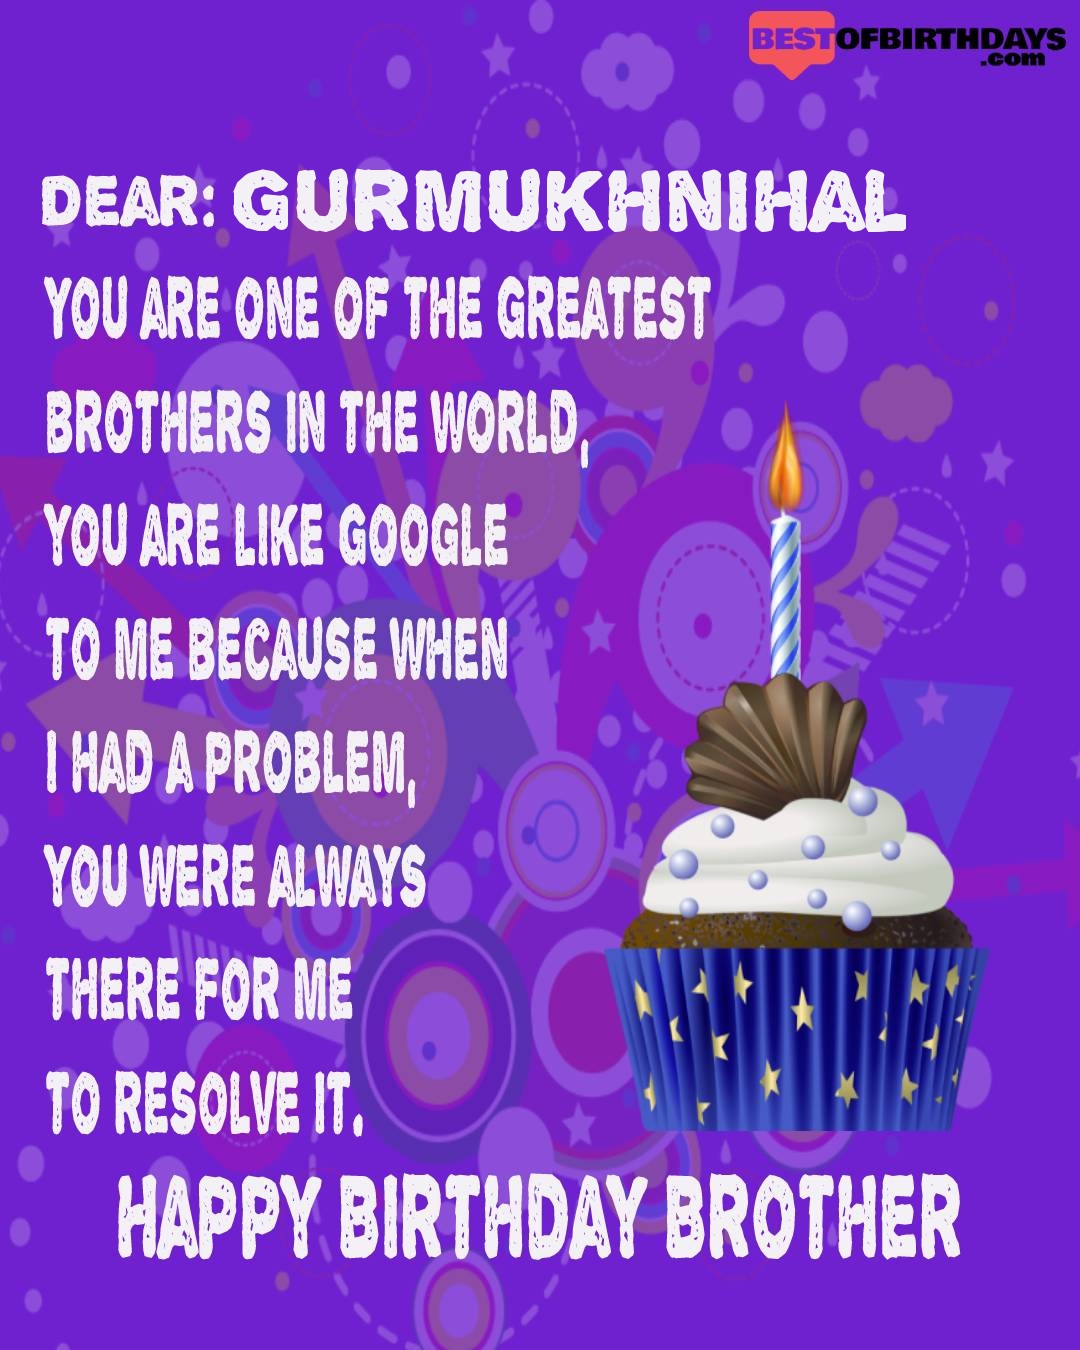 Happy birthday gurmukhnihal bhai brother bro